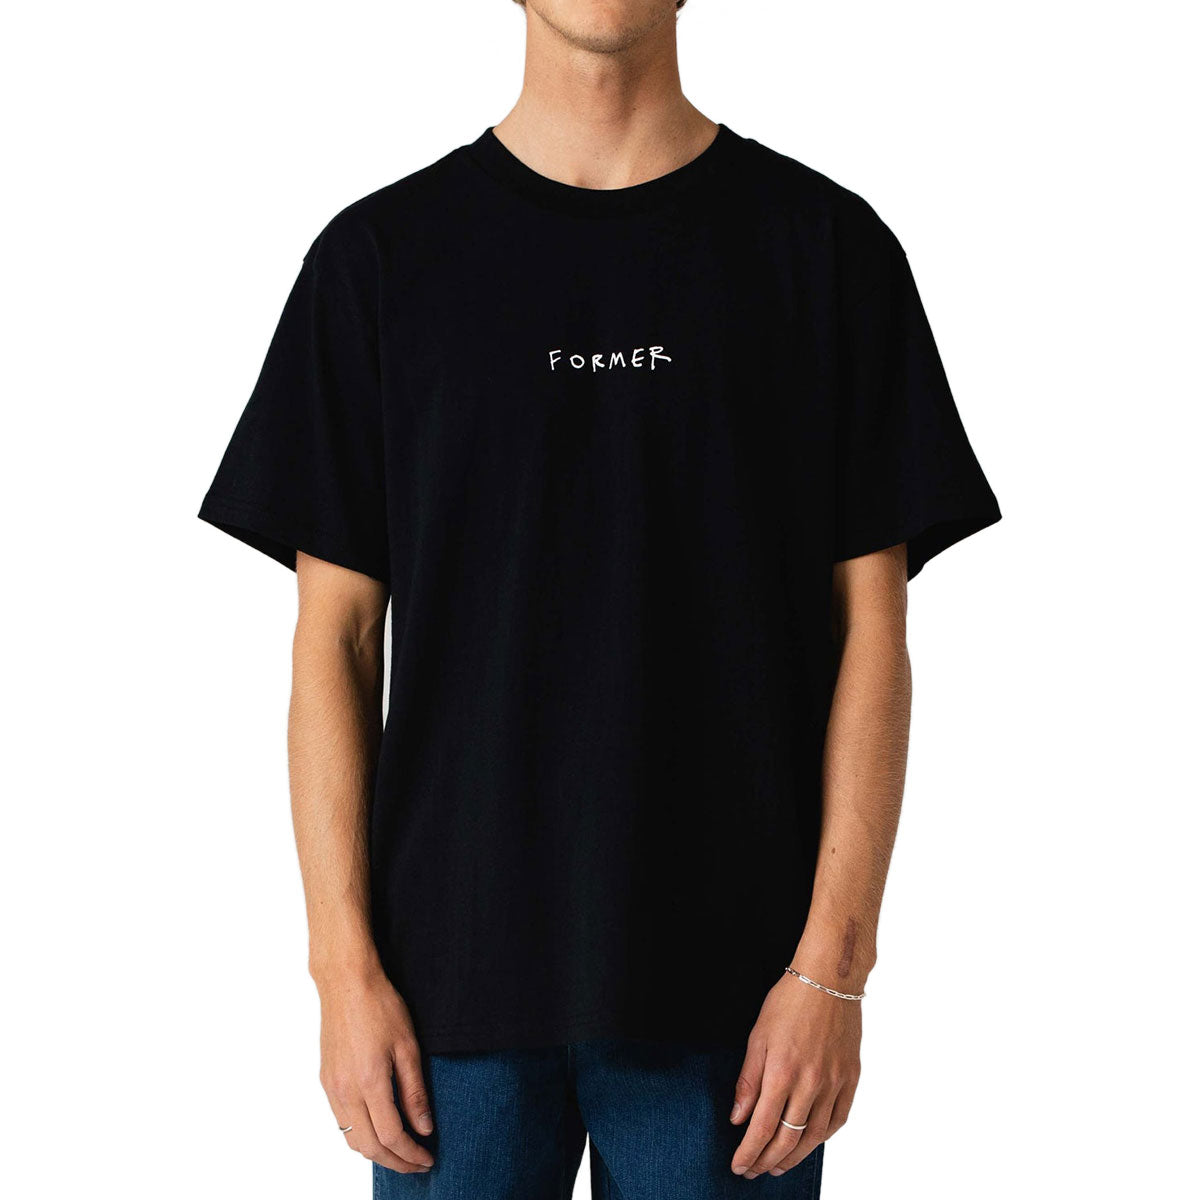 Former Pound T-Shirt - Black image 4